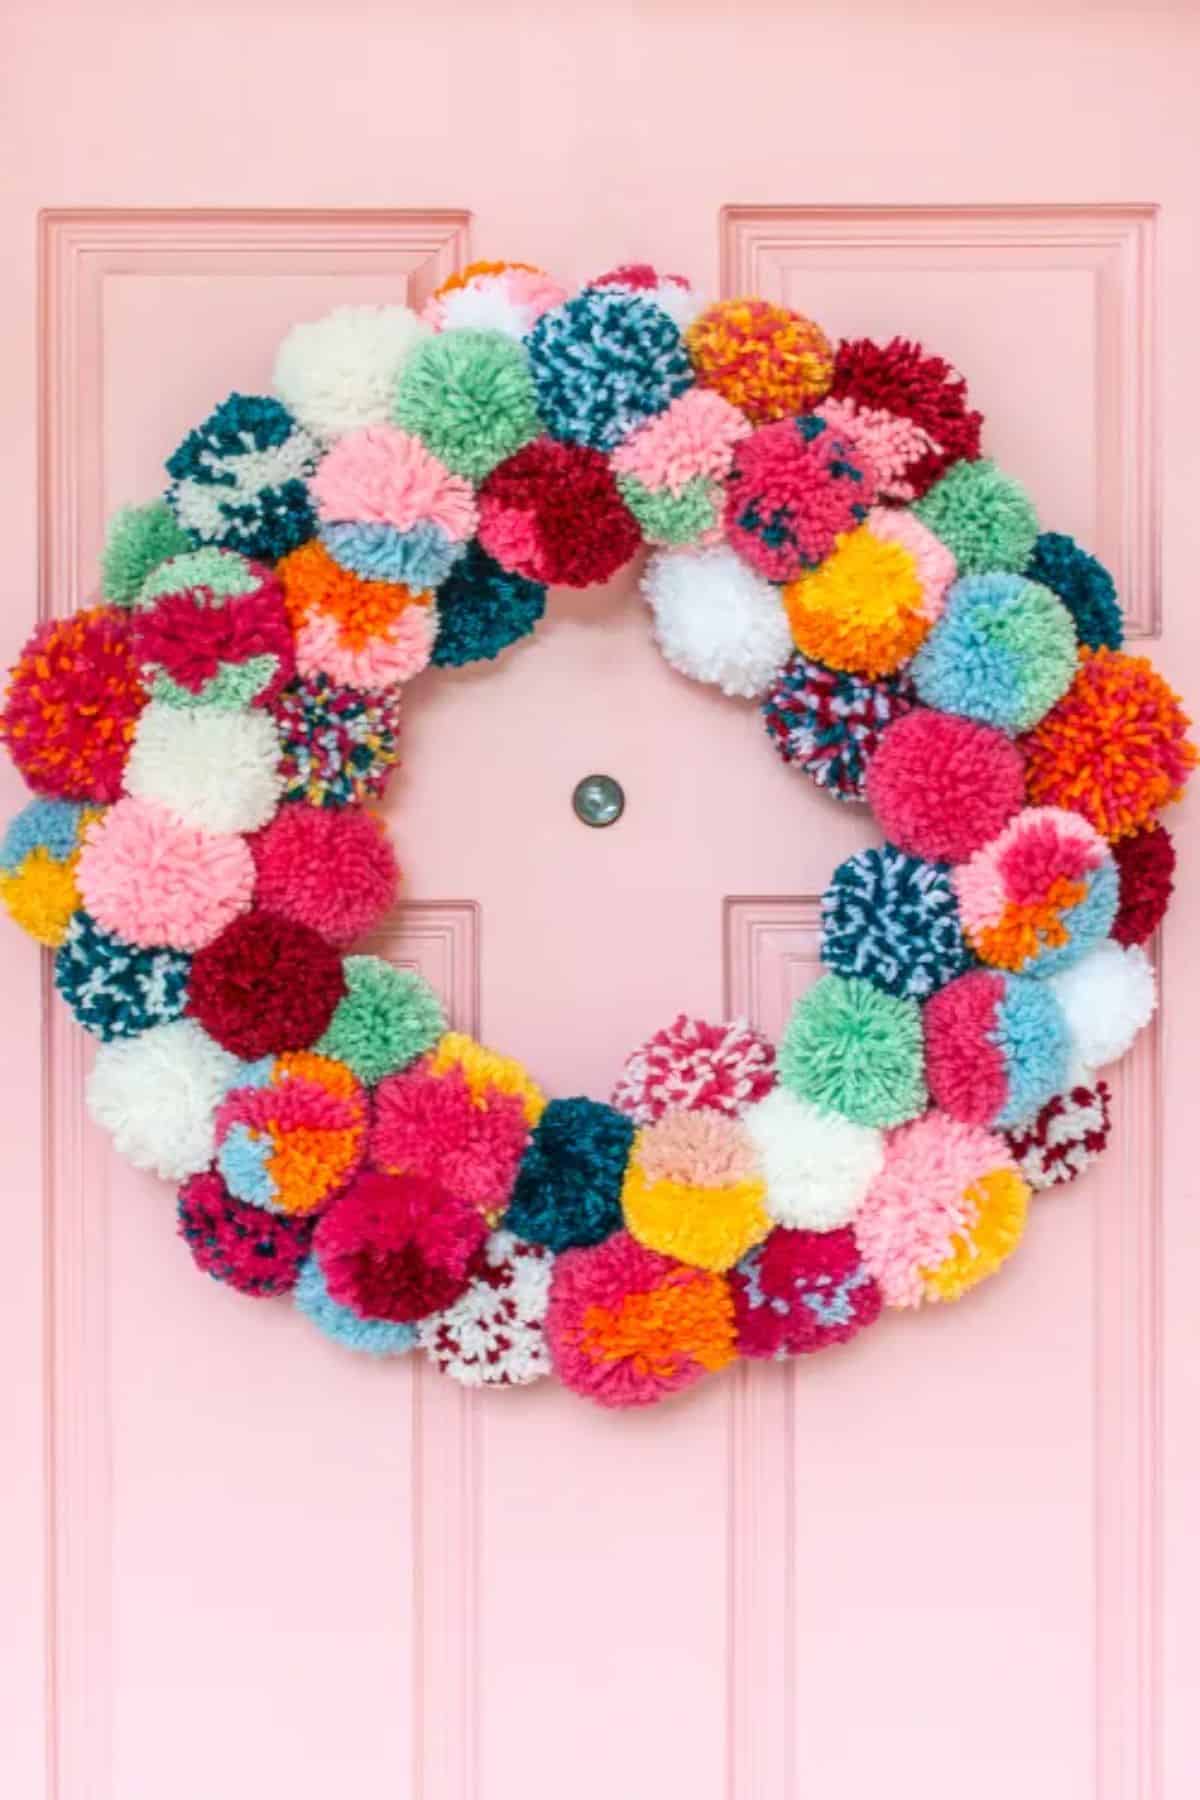 DIY Pom-Pom Holiday Wreath